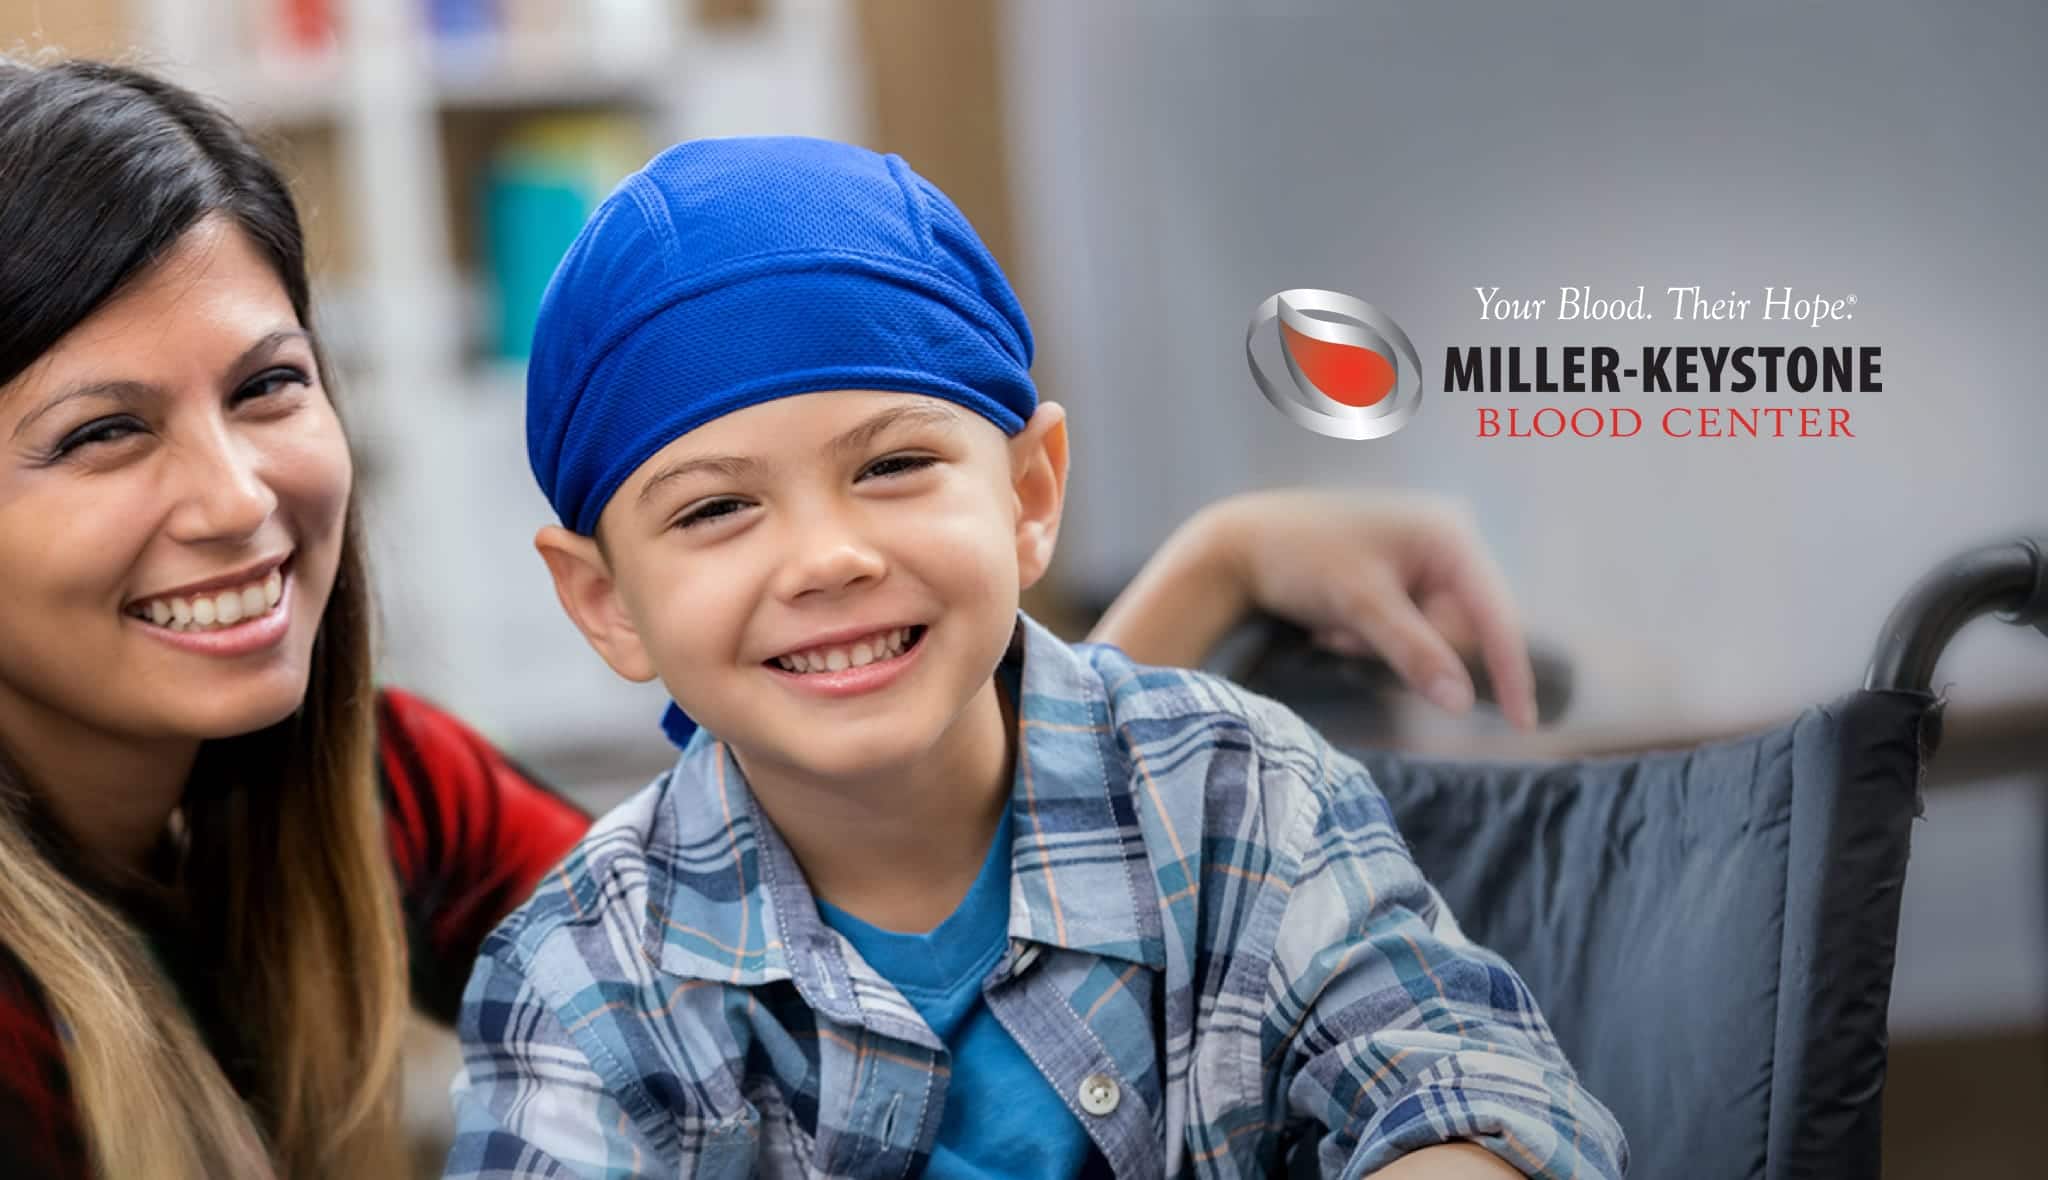 Miller-Keystone Blood Center Website